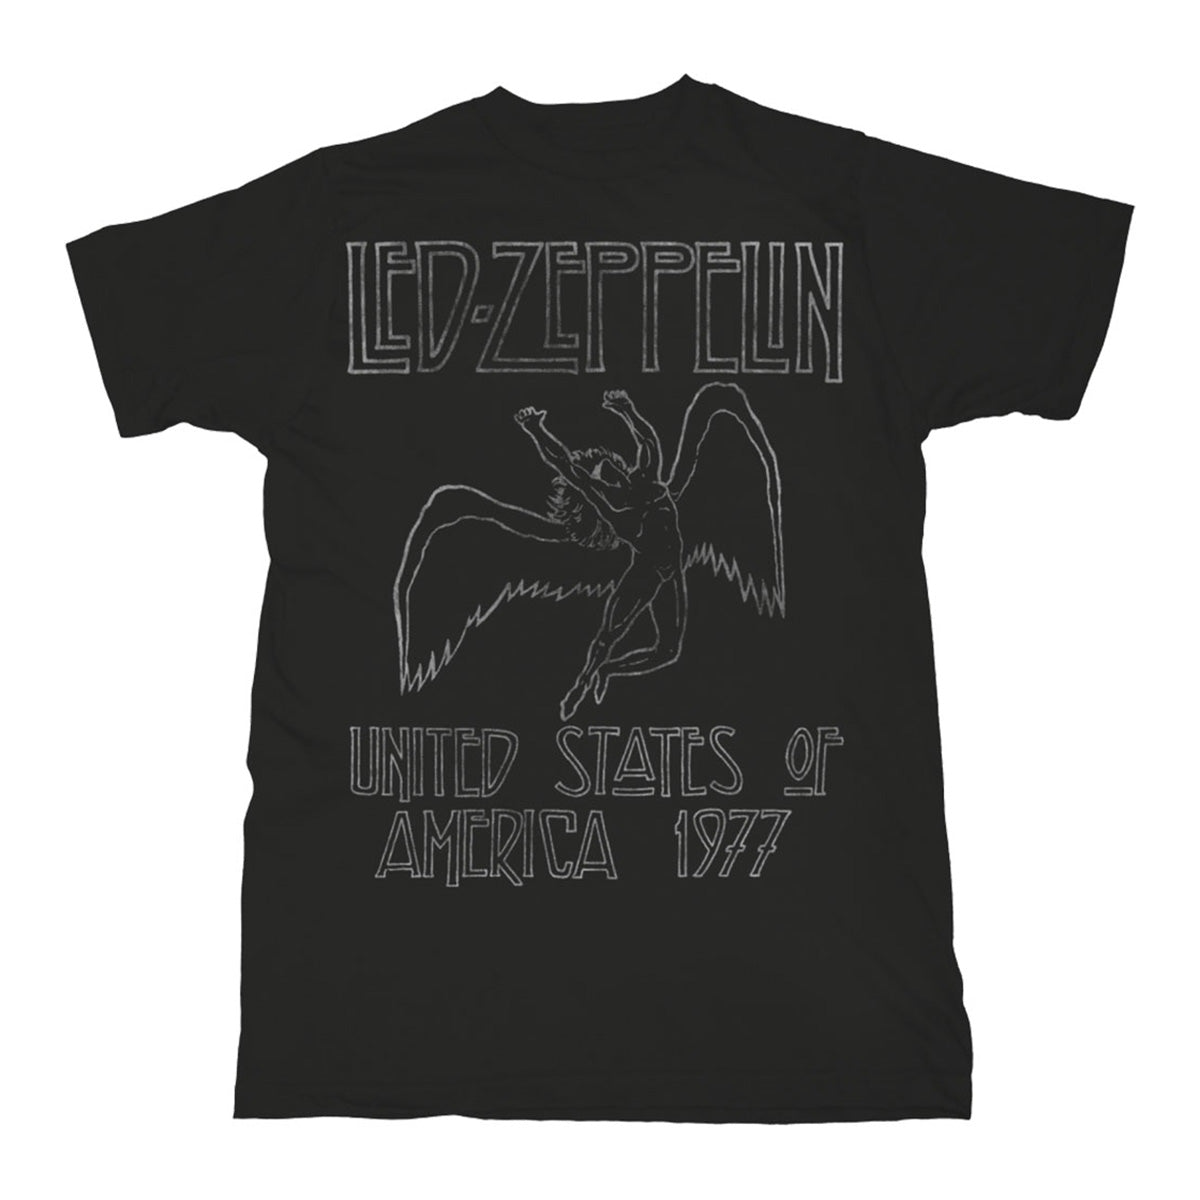 Led Zeppelin - USA '77 Tee